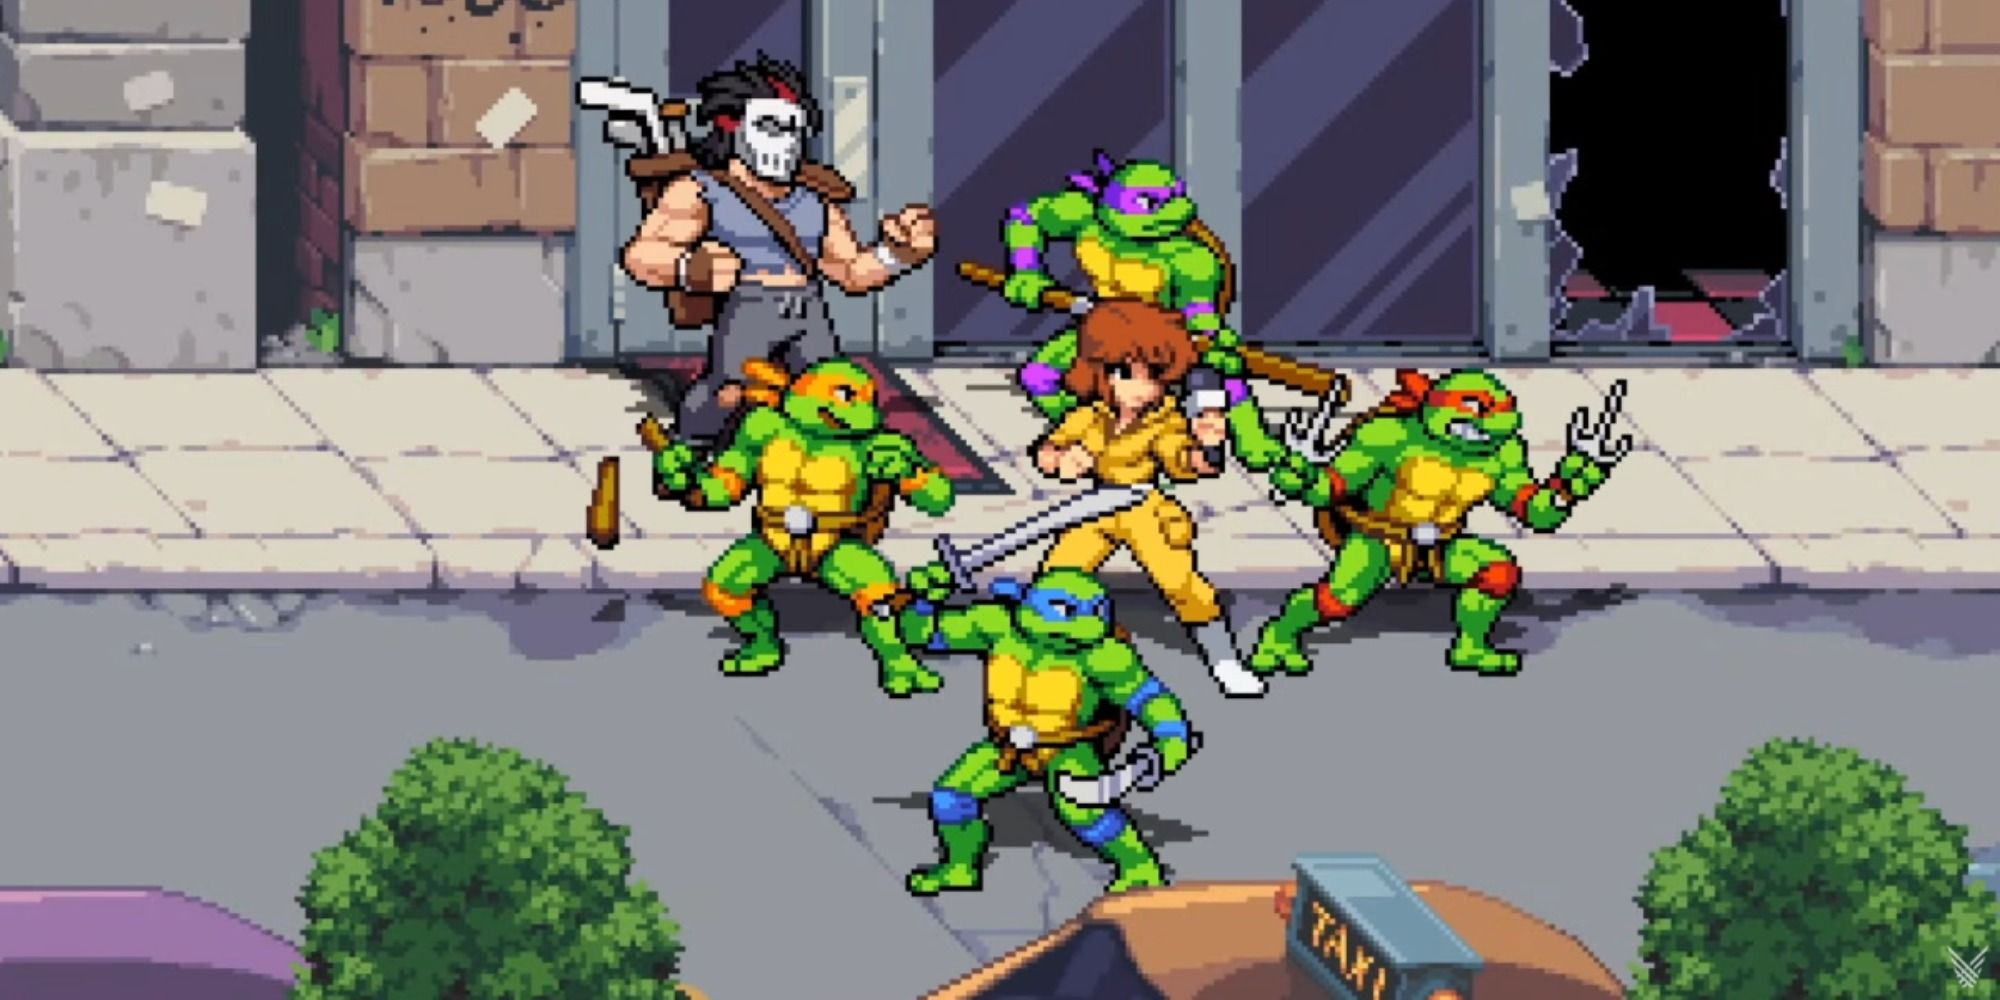 A full team of six players (Casey Jones, Michelangelo, Leonardo, April, Donatello, and Raphael) in Teenage Mutant Ninja Turtles: Shredder's Revenge